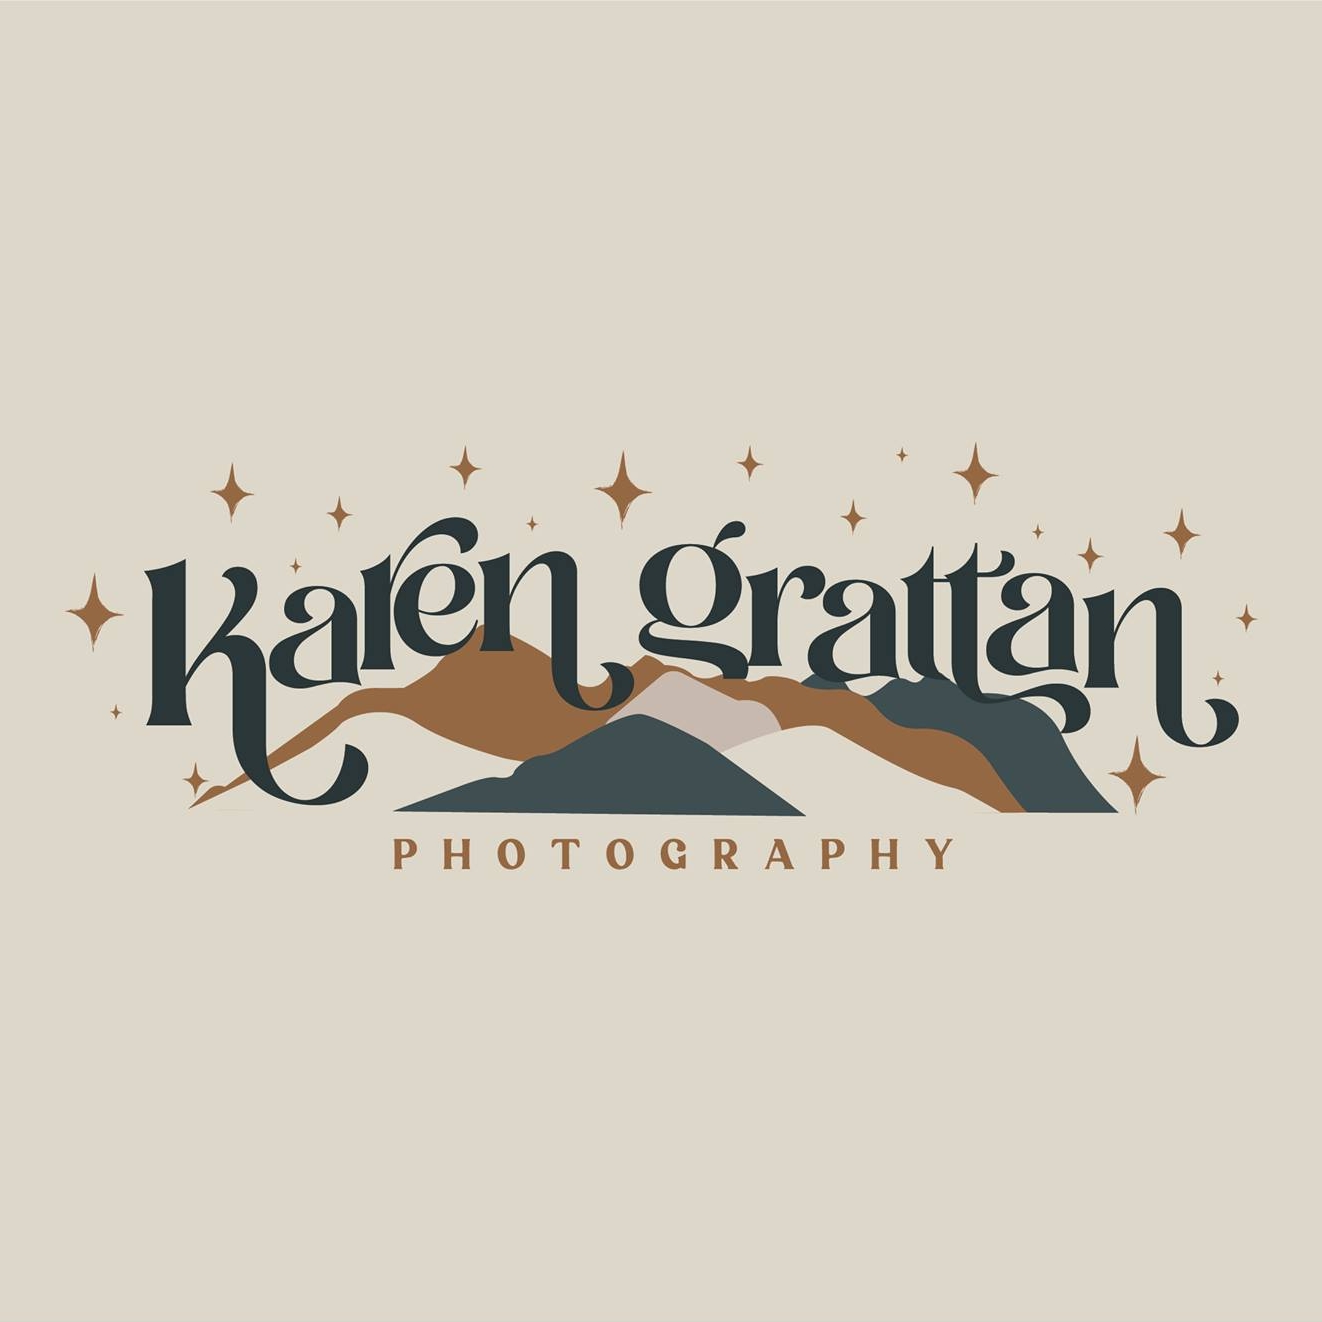 Karen Grattan Photography